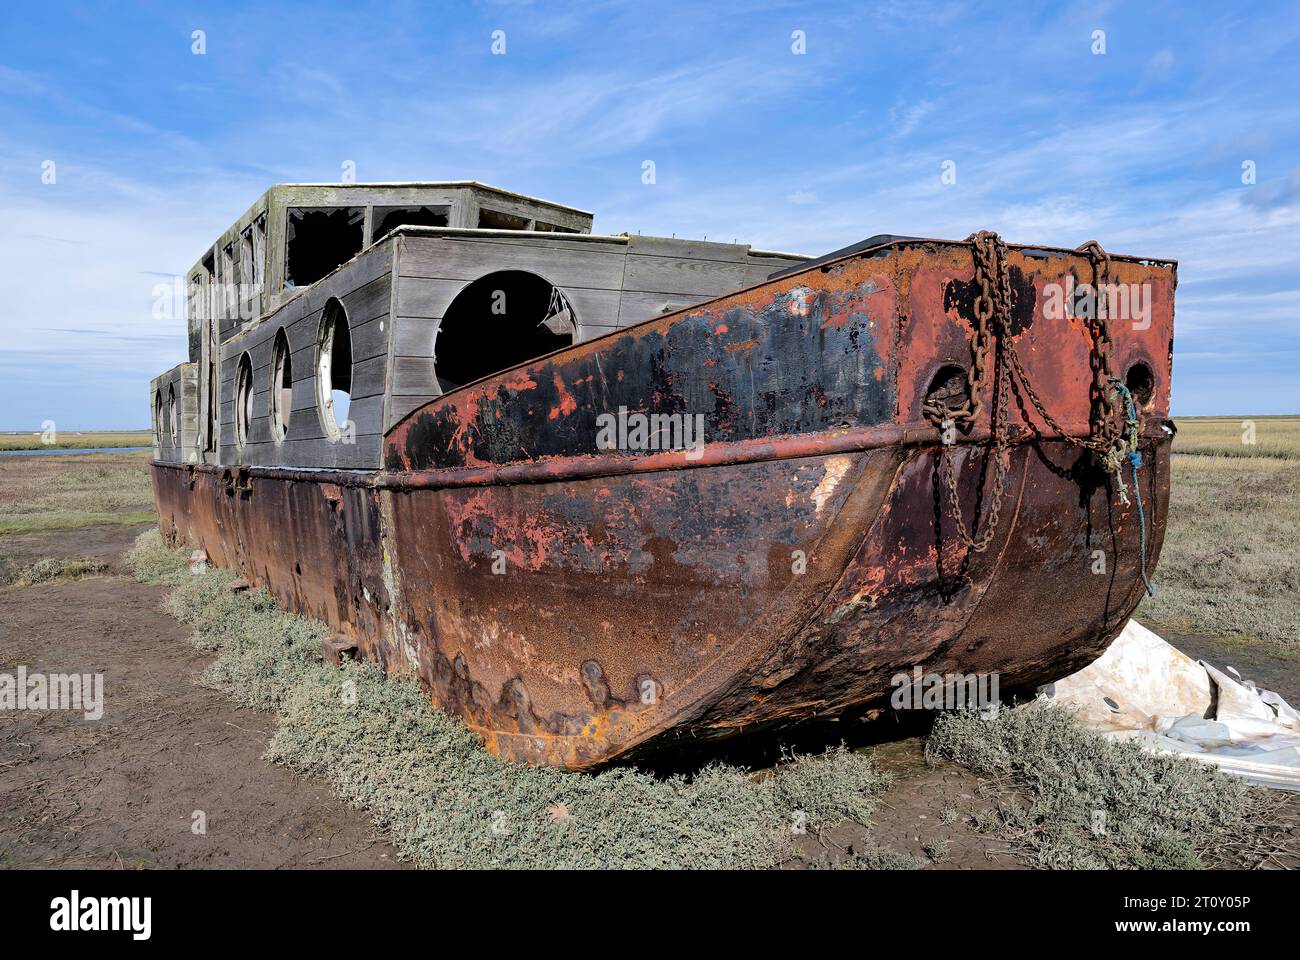 Rusting ex-houseboat in blakeney, norfolk Stock Photo